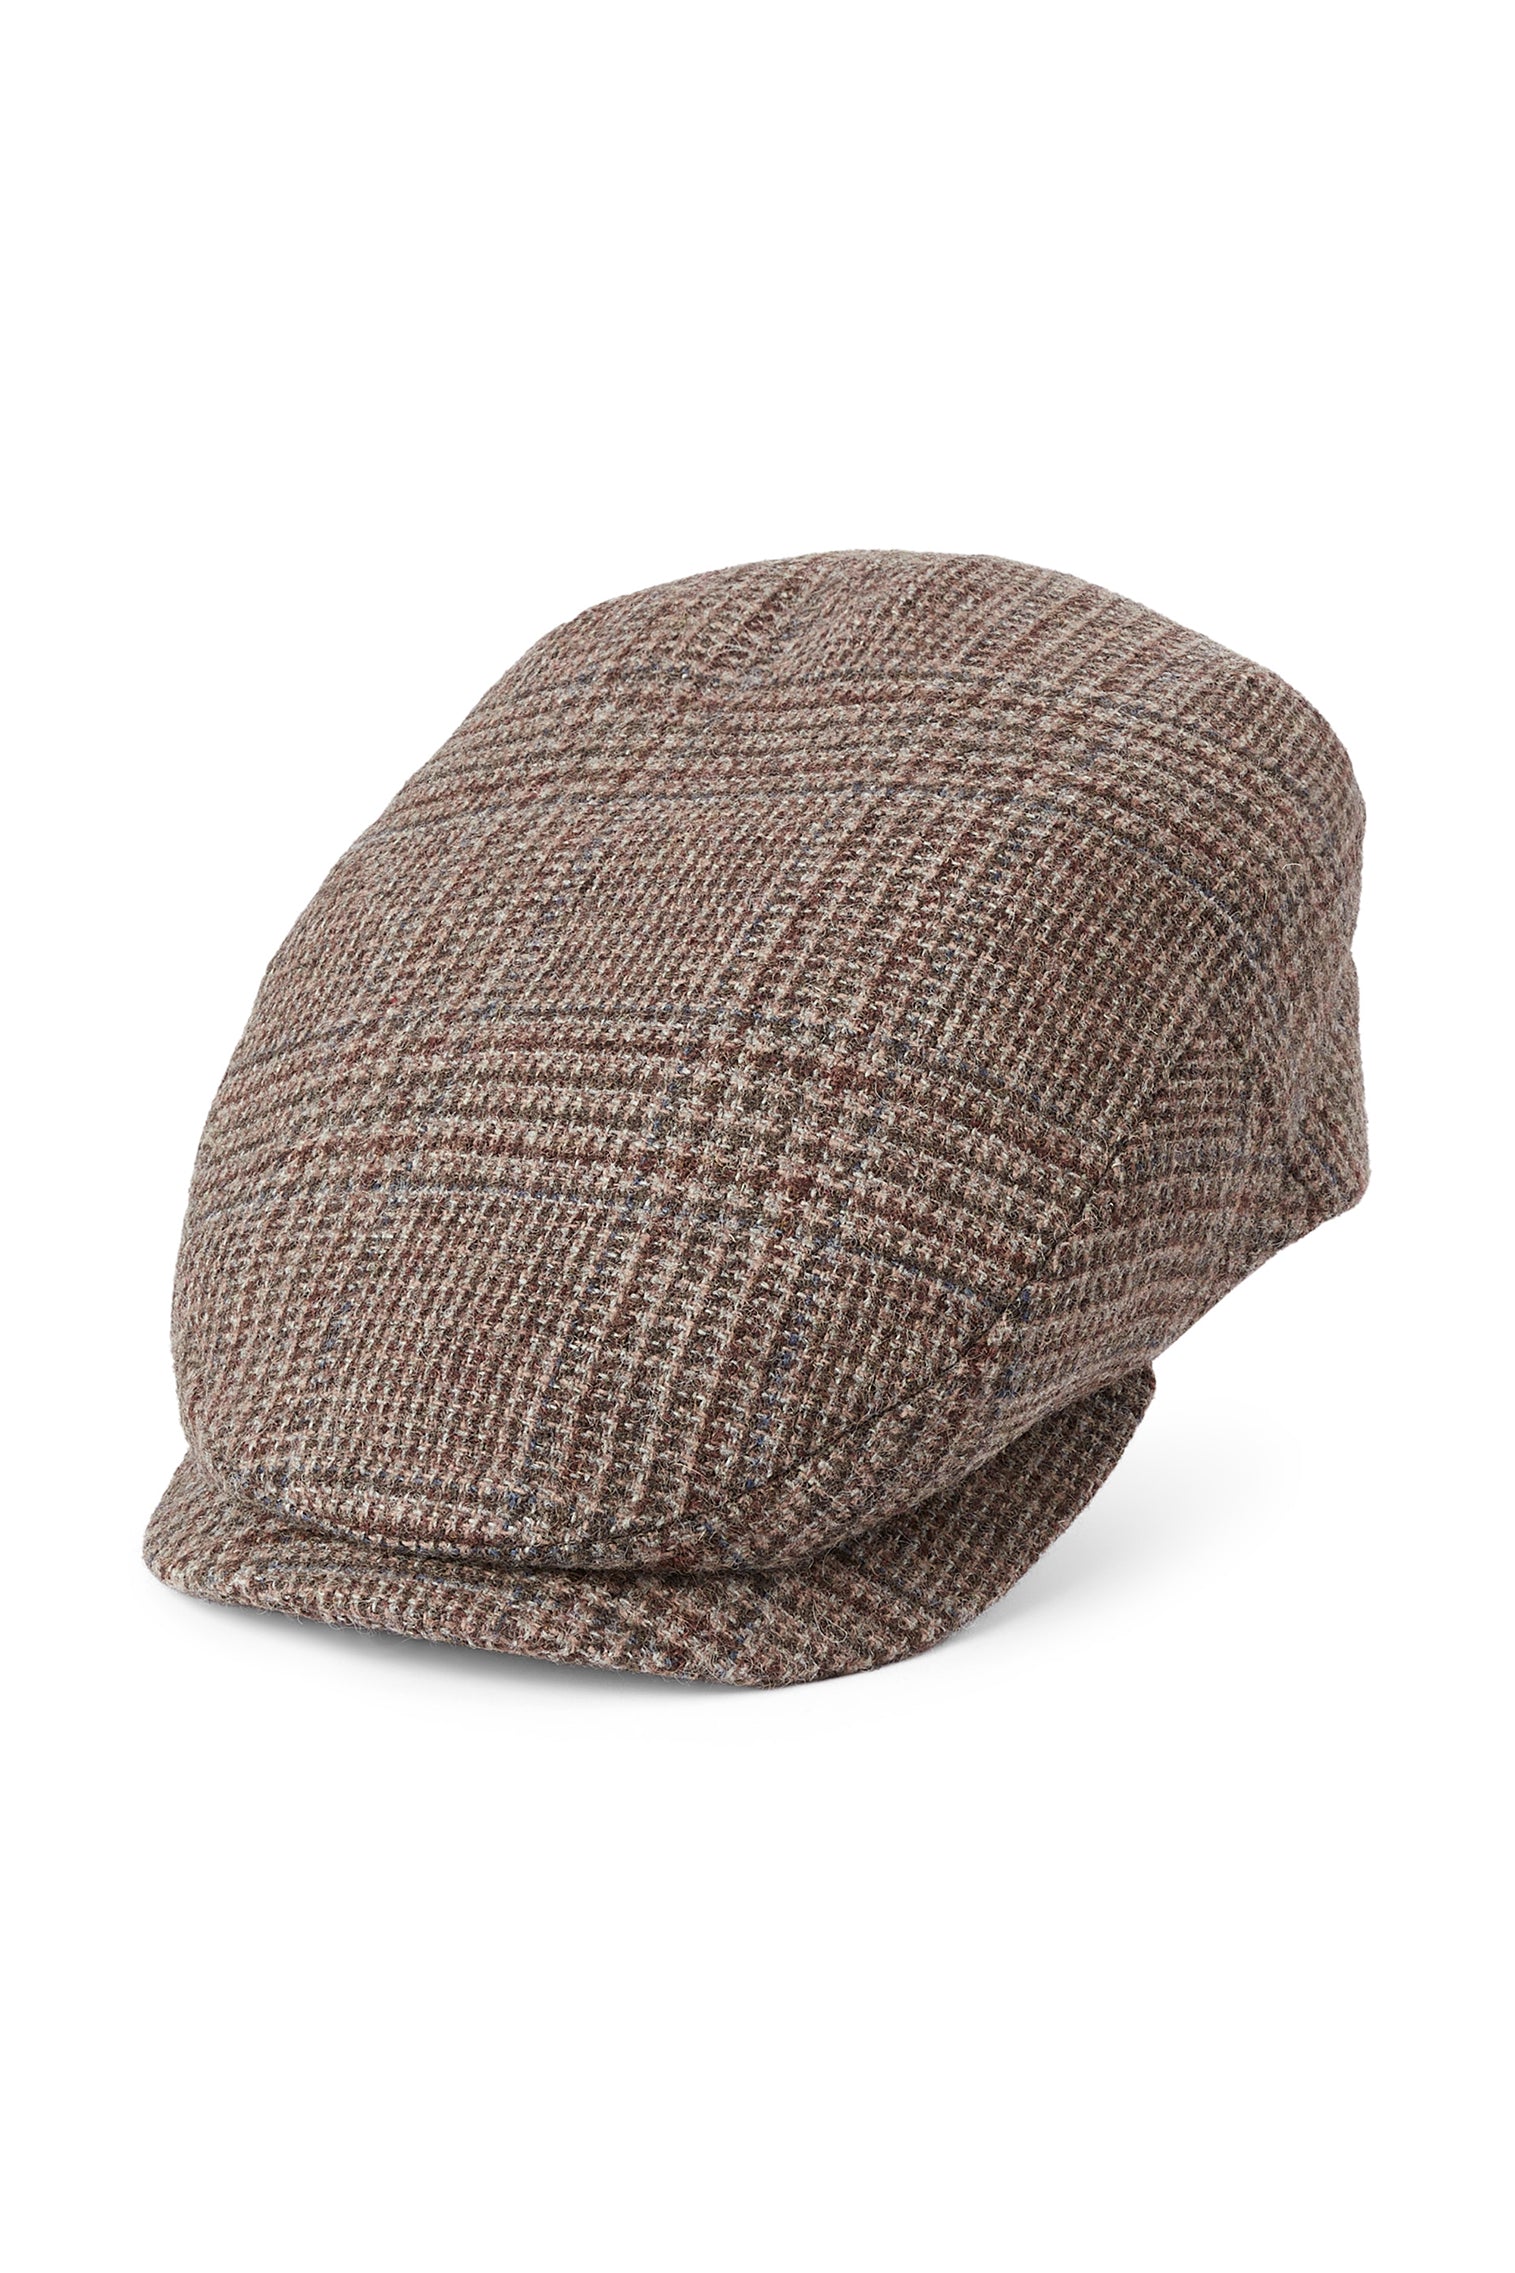 Drifter Glen Check Flat Cap - Hats for Oval Face Shapes - Lock & Co. Hatters London UK